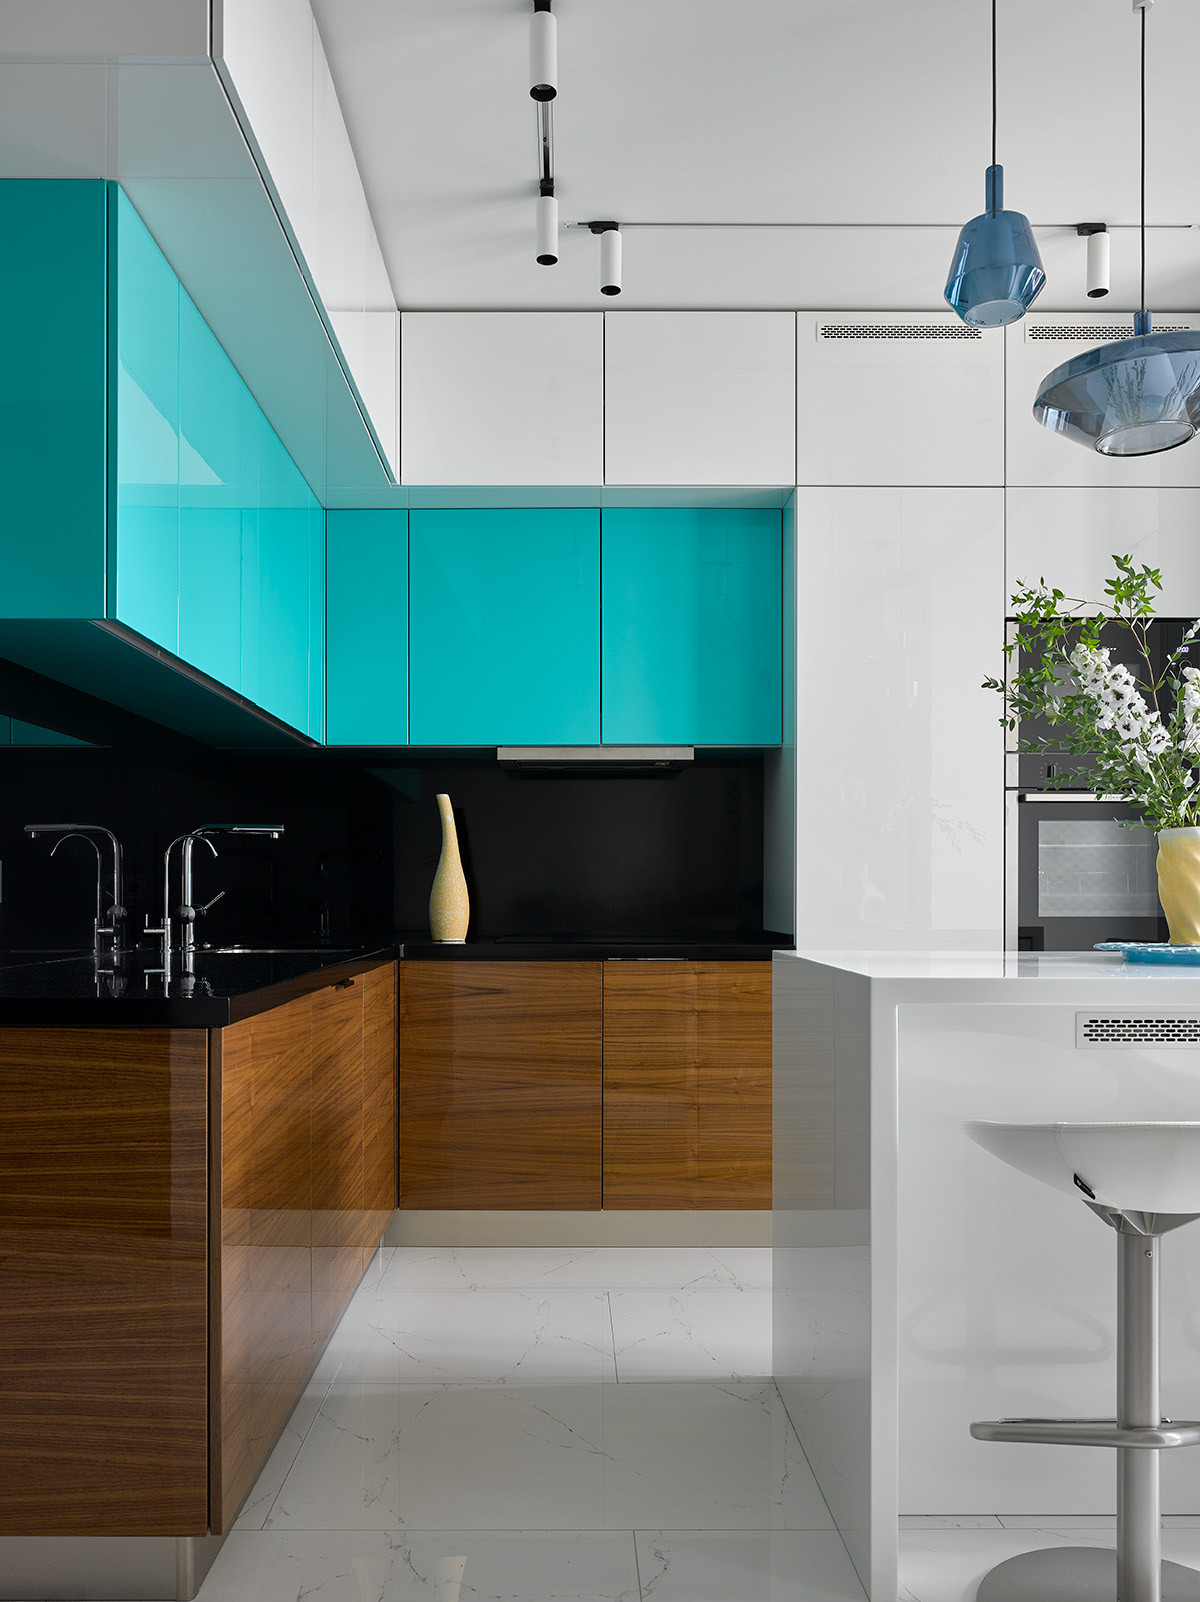 Turquoise Kitchen Decor & Appliances  Turquoise kitchen decor, Turquoise  kitchen, Turquoise kitchen appliances